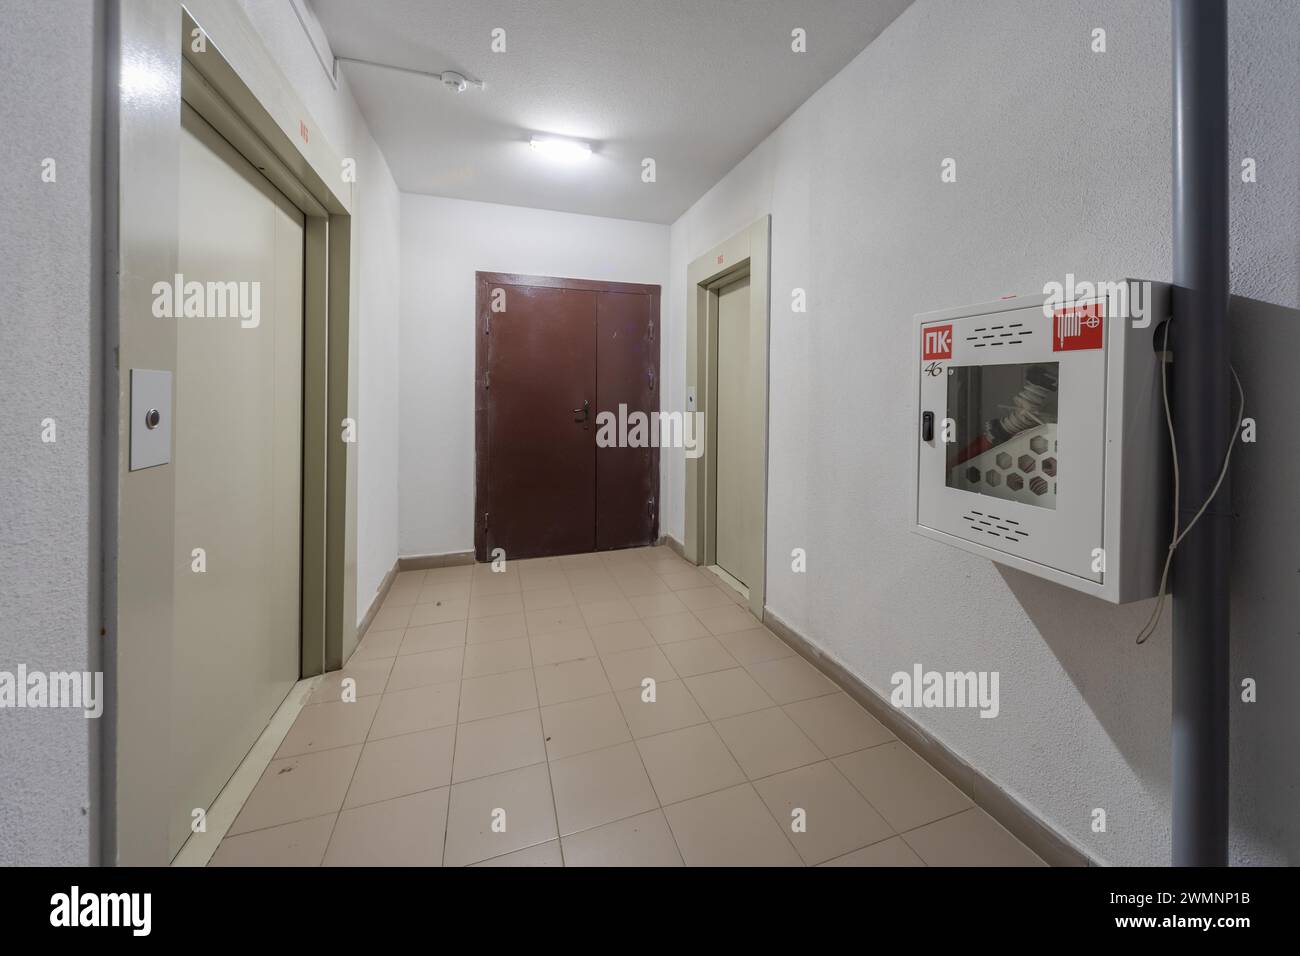 Interior of an apartment building entrance Stock Photo